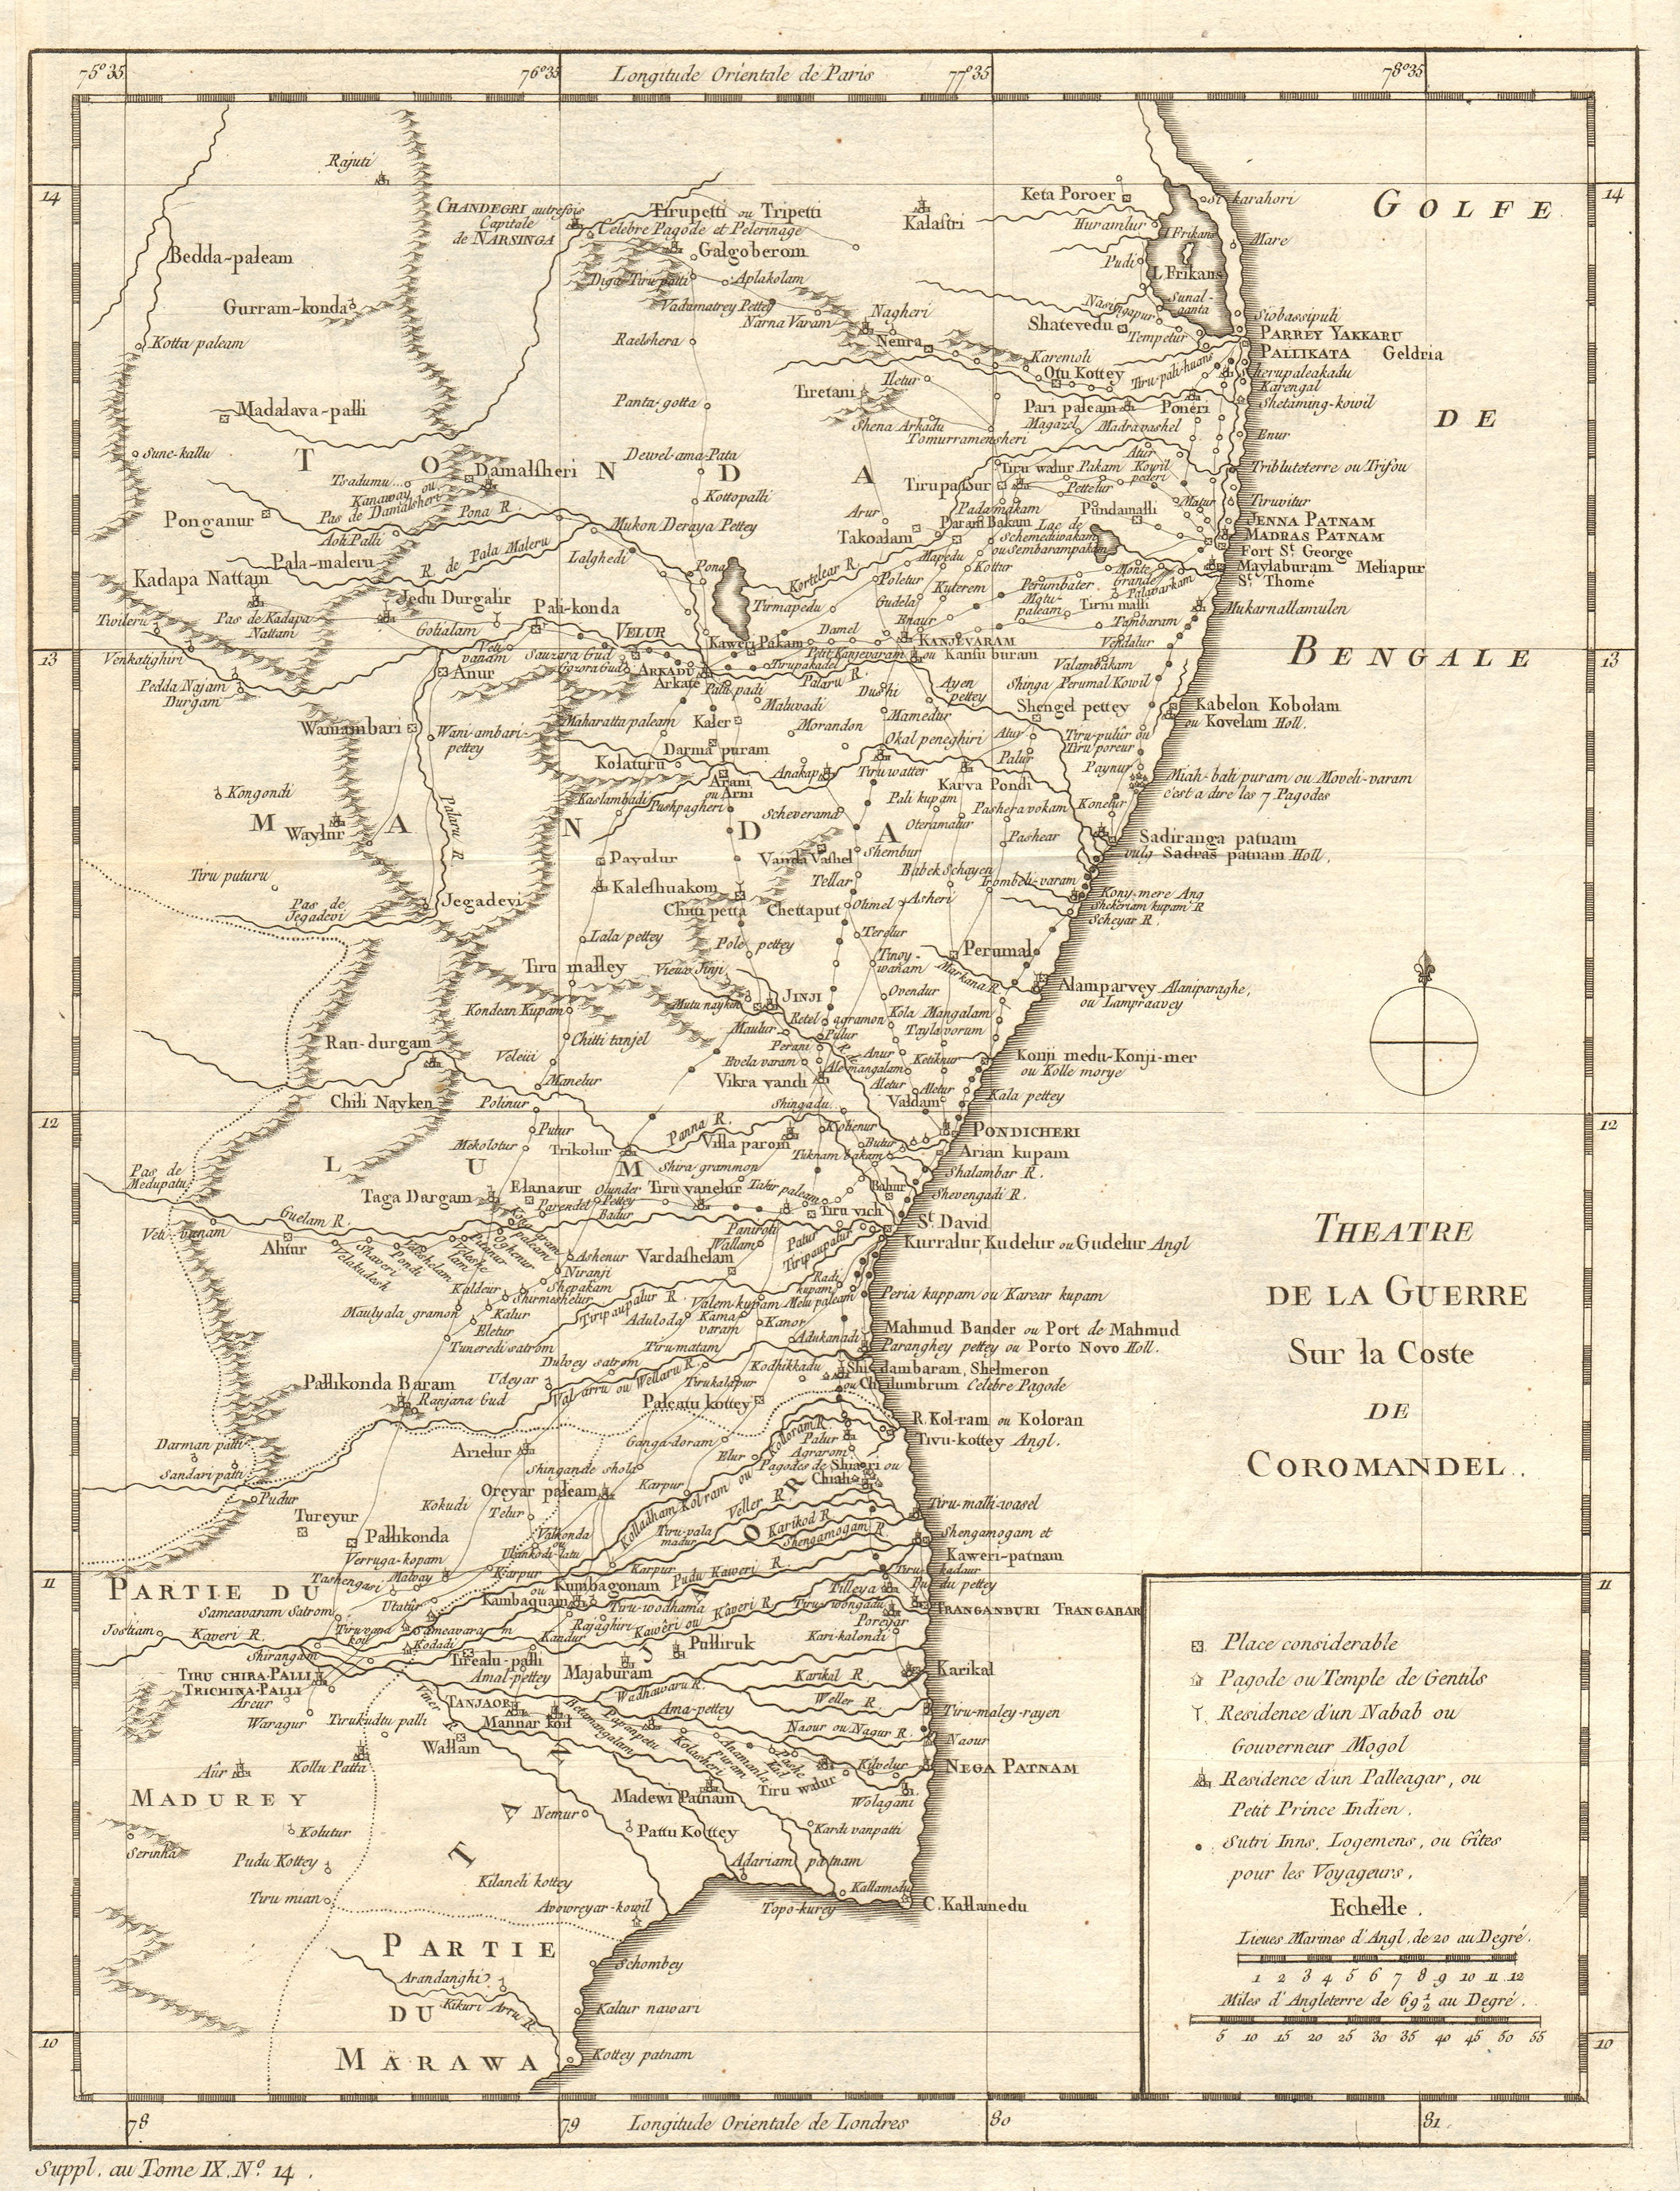 'Thèatre de la guerre sur la Coste de Coromandel'. Tamil Nadu. BELLIN 1761 map